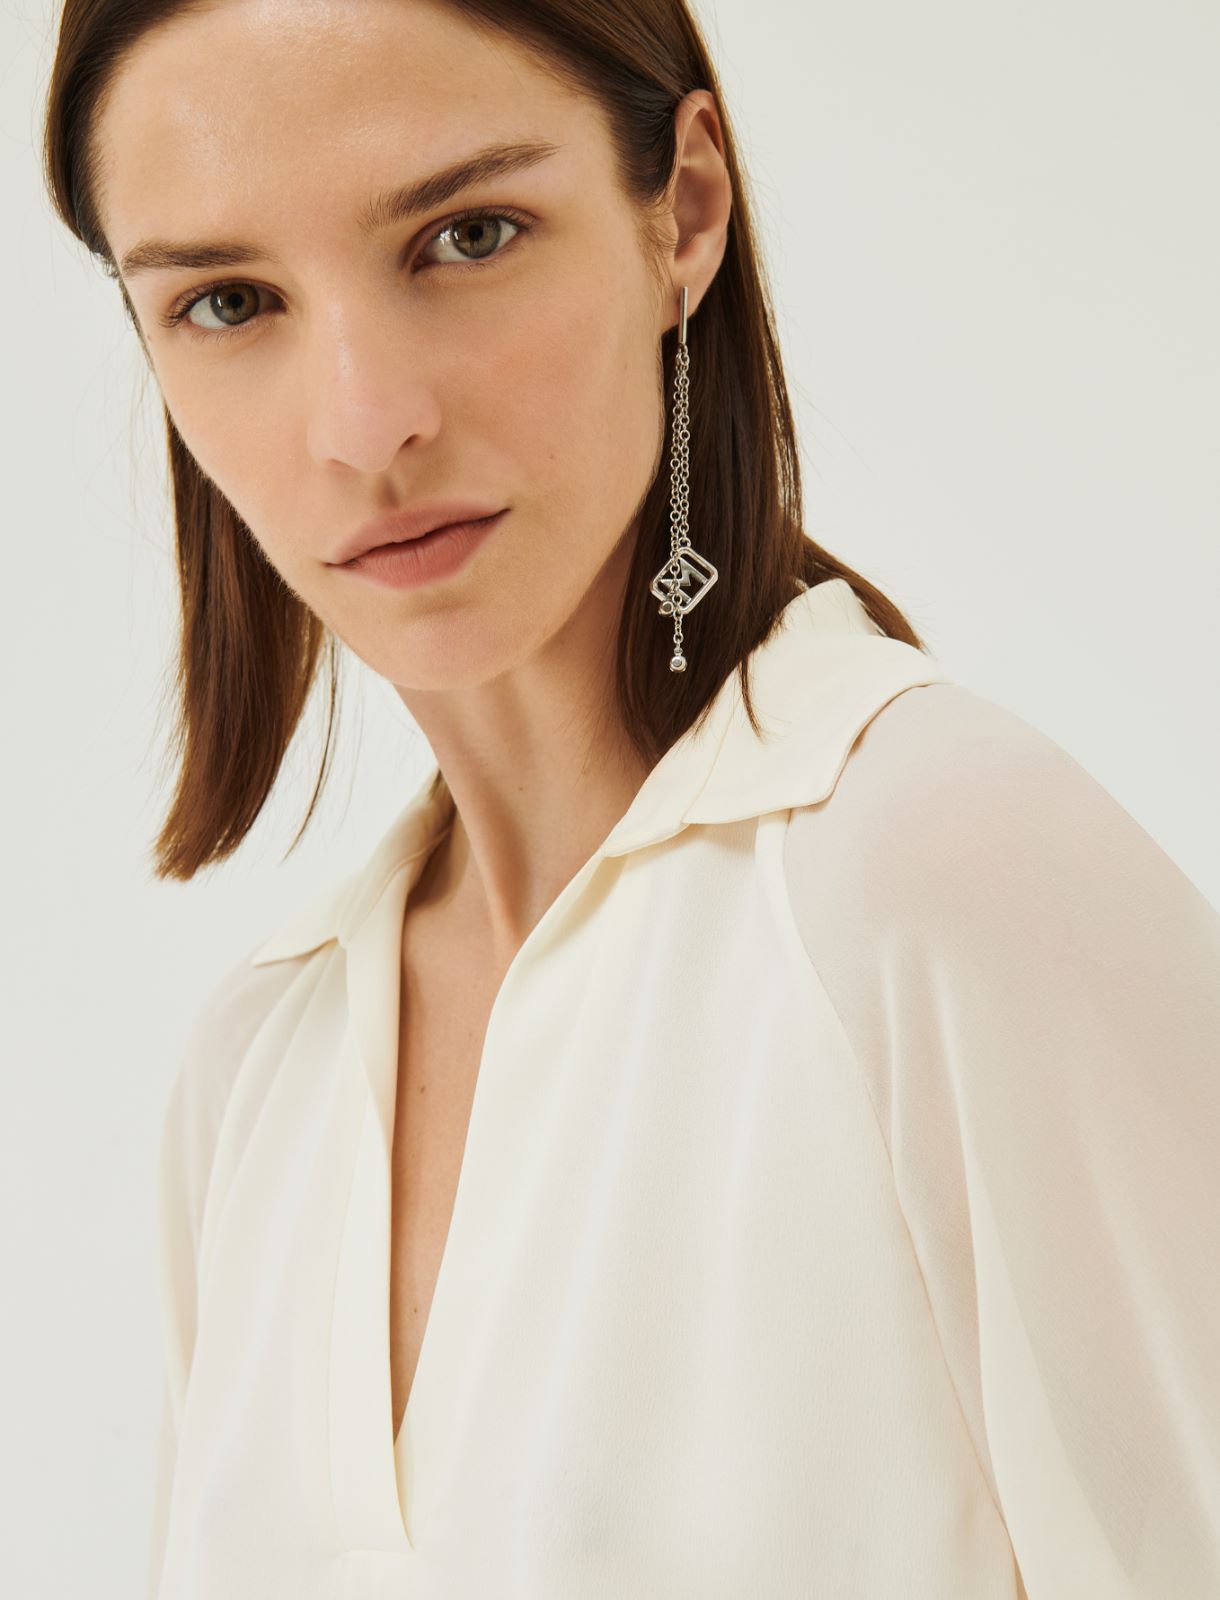 Satin blouse - Wool white - Marina Rinaldi - 4